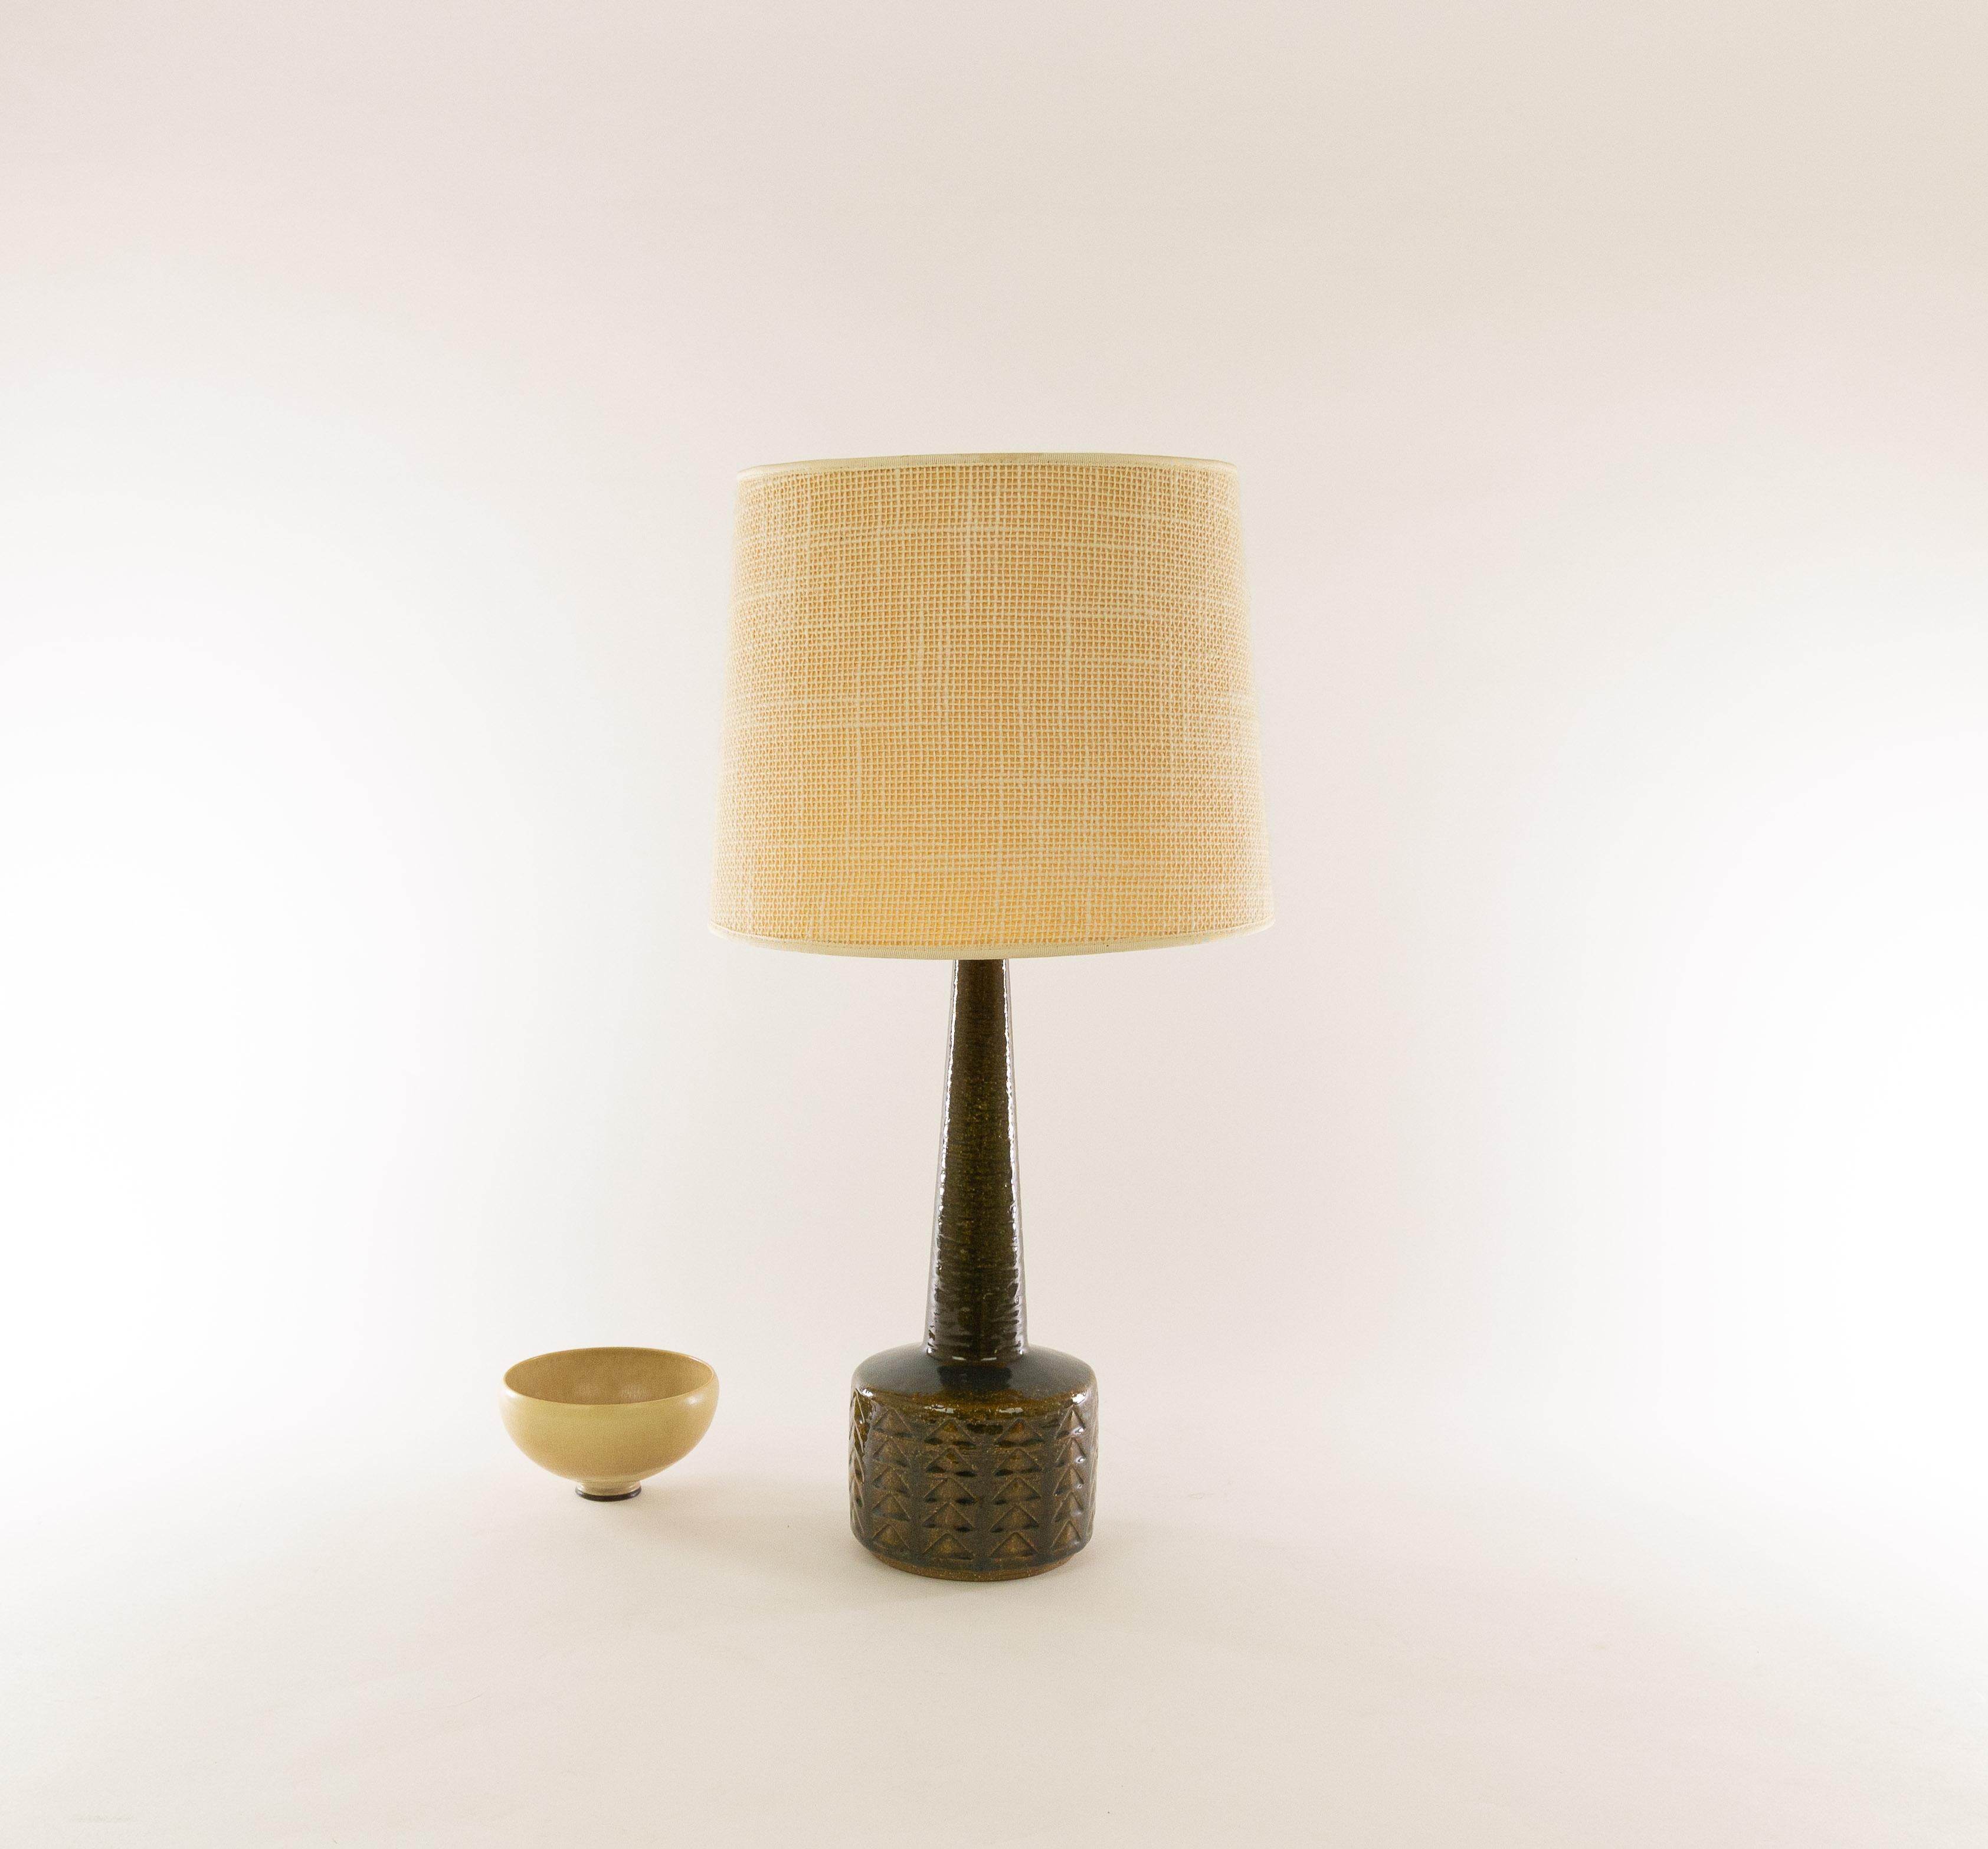 Scandinavian Modern Olive and Amber DL/35 Table Lamp by Linnemann-Schmidt for Palshus, 1960s For Sale